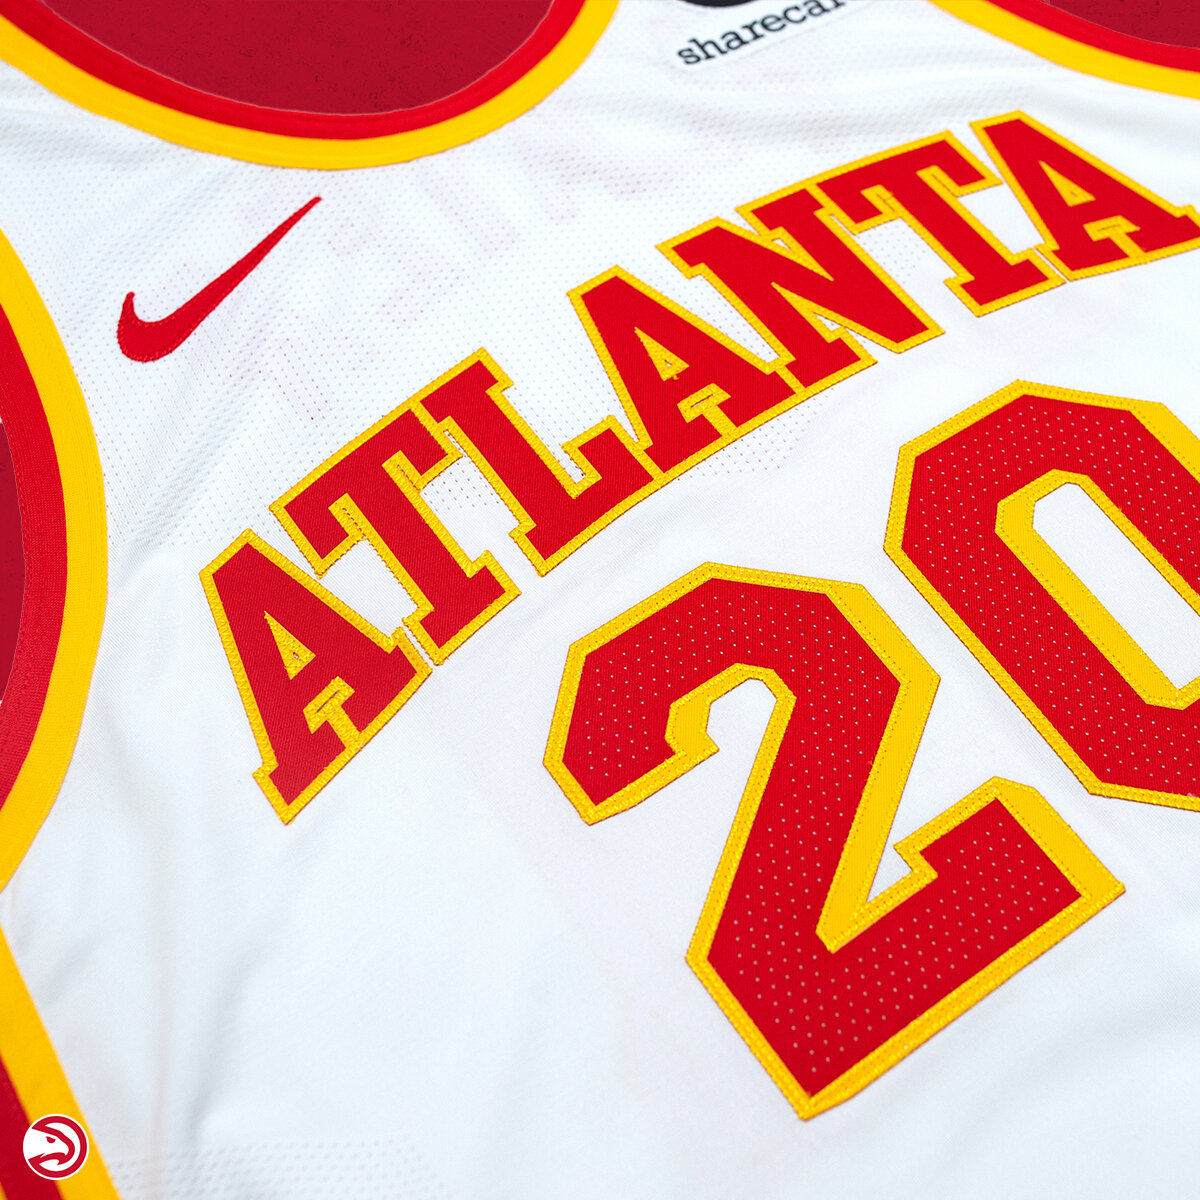 2019-20 Atlanta Hawks 'City Edition' Uniform — UNISWAG